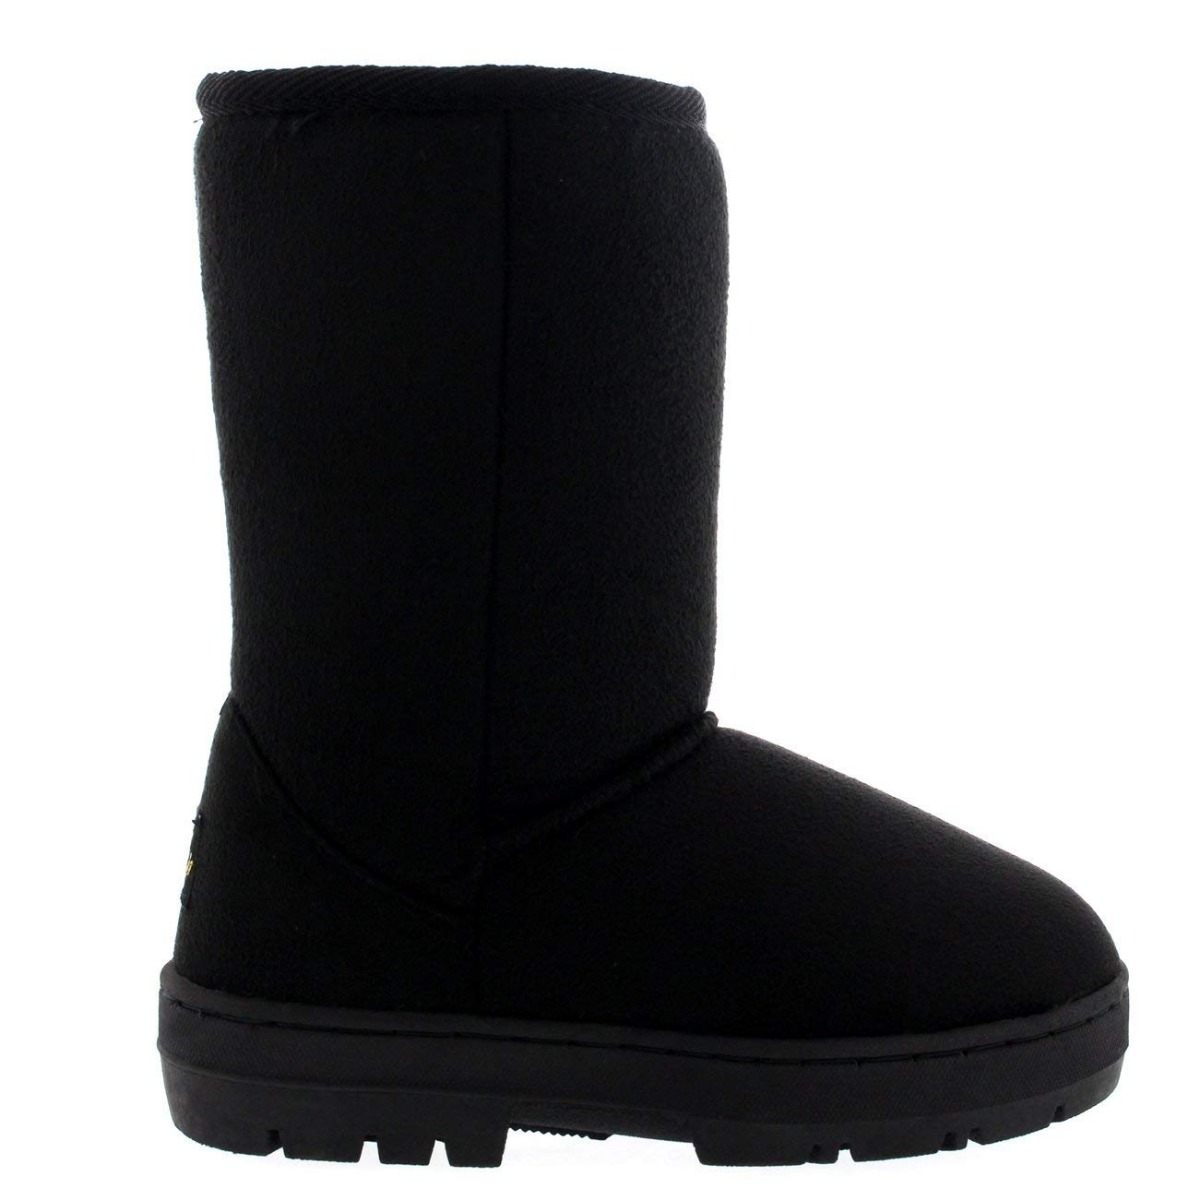 snow boots kids size 1